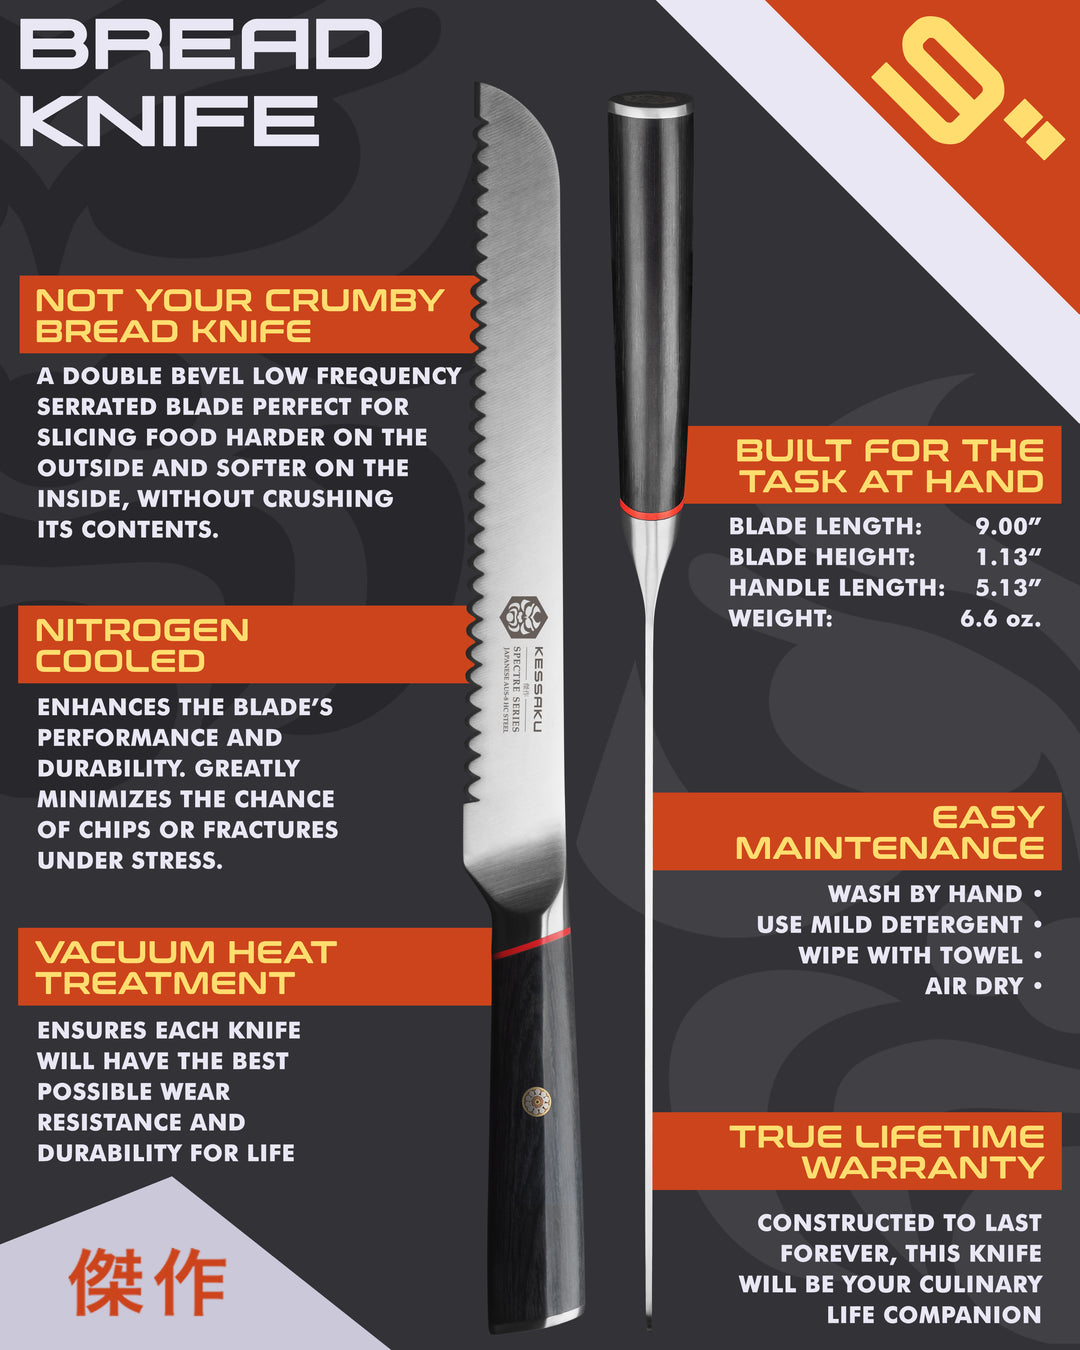 Kessaku Spectre Bread Knife uses, dimensions, maintenance, warranty info, and additional blade treatments